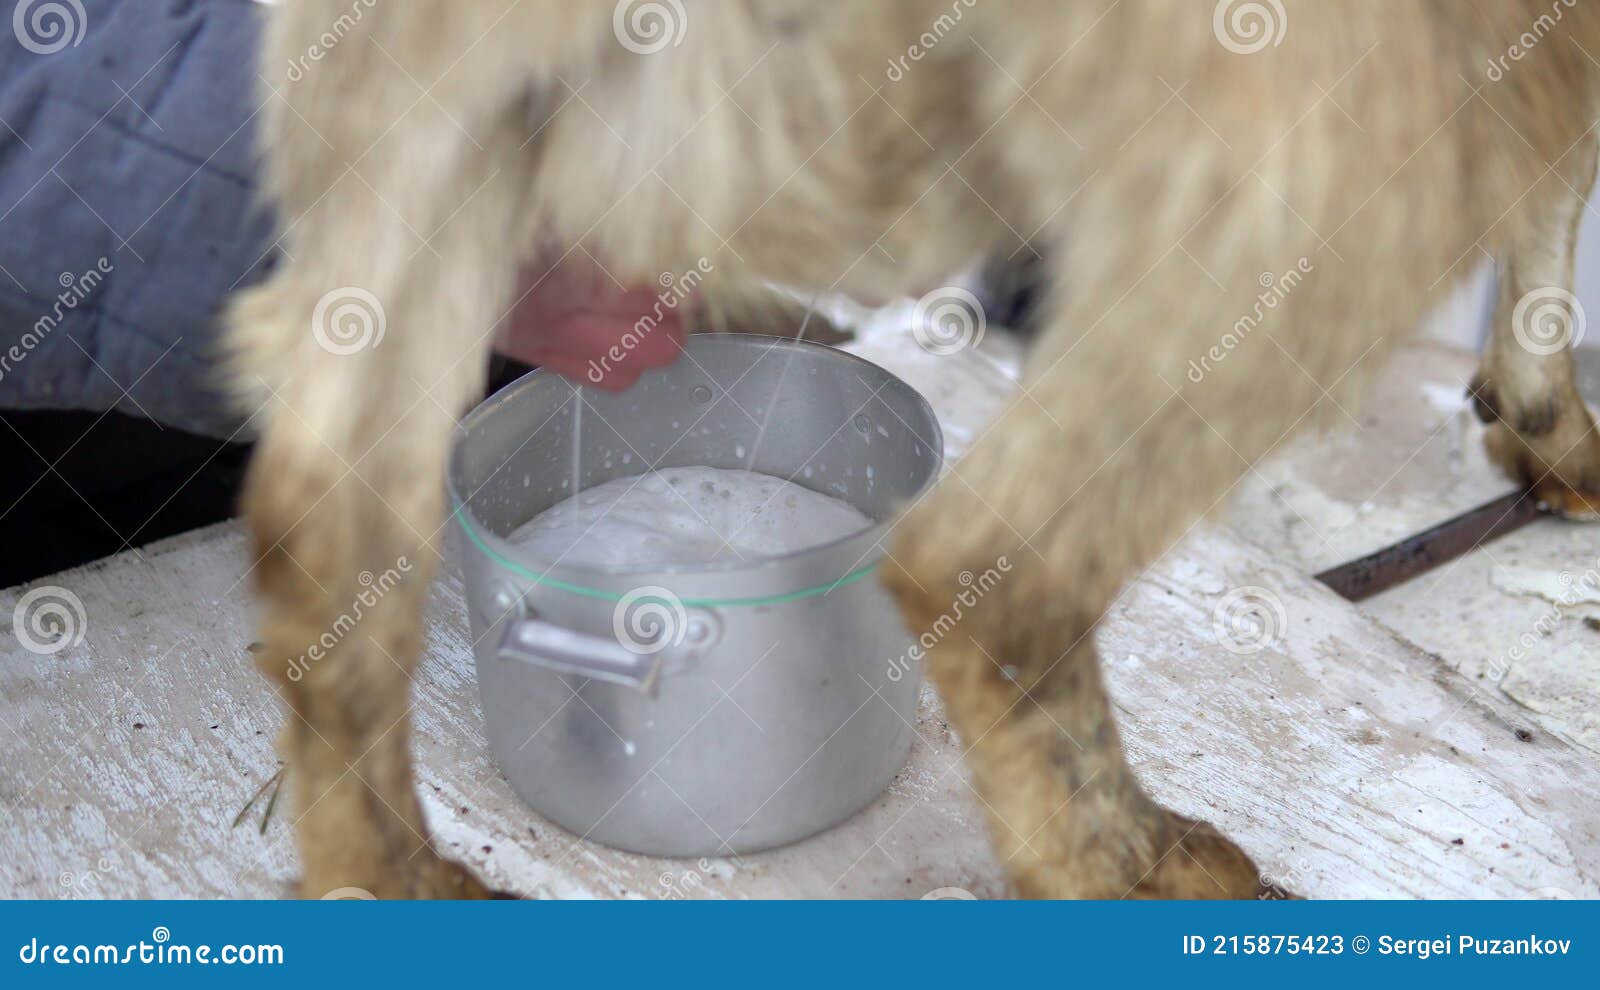 a man milks the udder of a beige goat. close-up of fresh goat milk froths in a saucepan